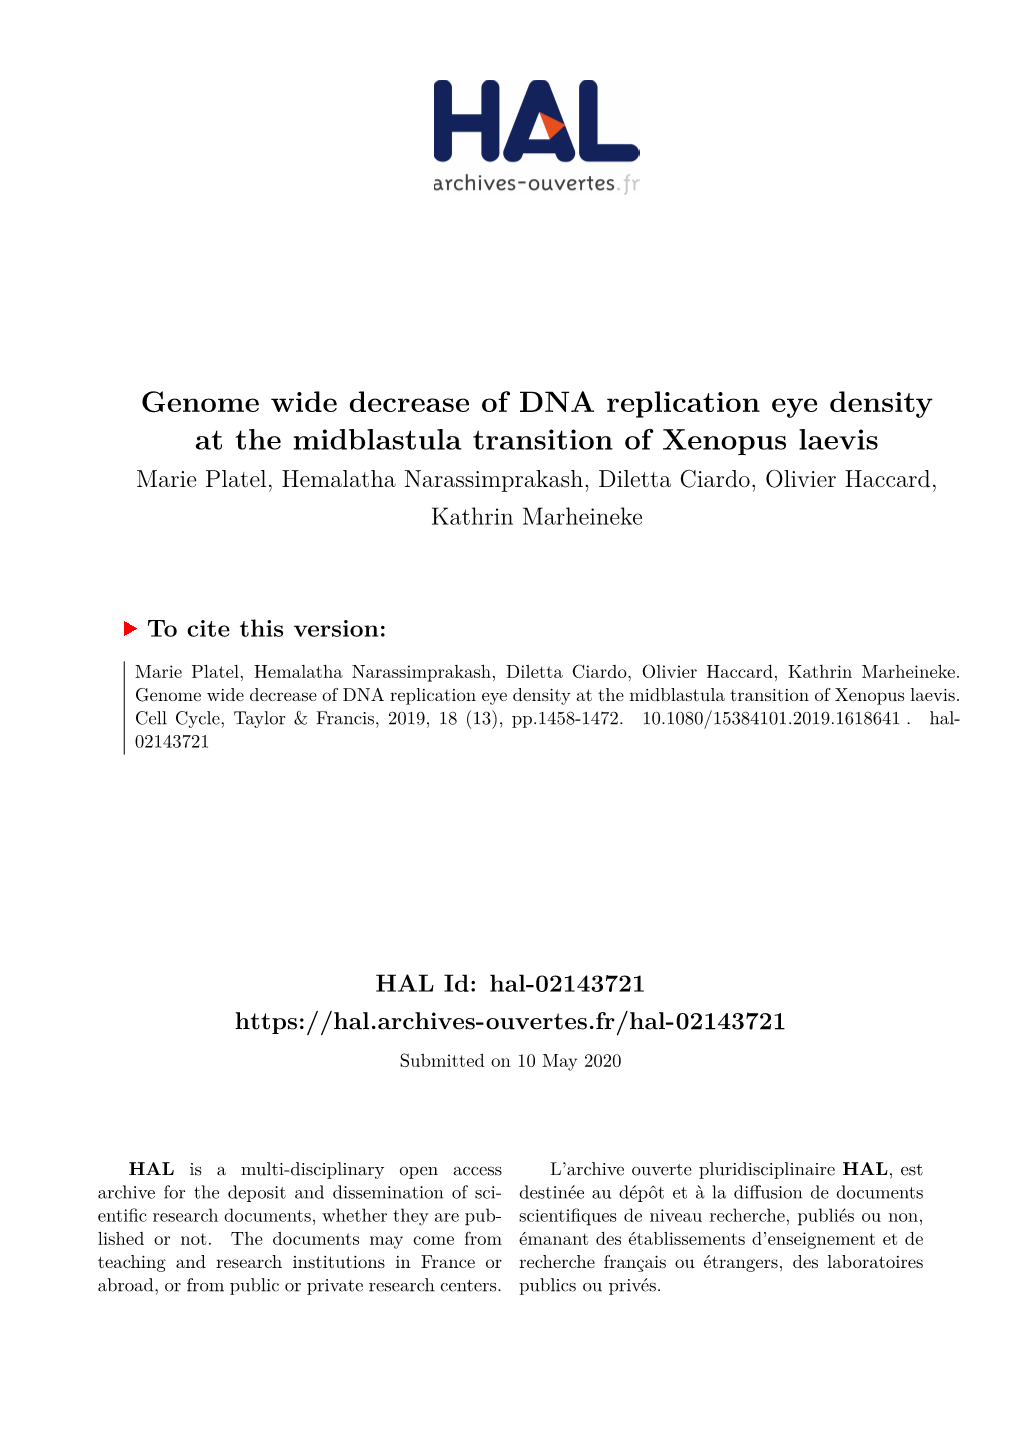 Genome Wide Decrease of DNA Replication Eye Density at the Midblastula Transition of Xenopus Laevis